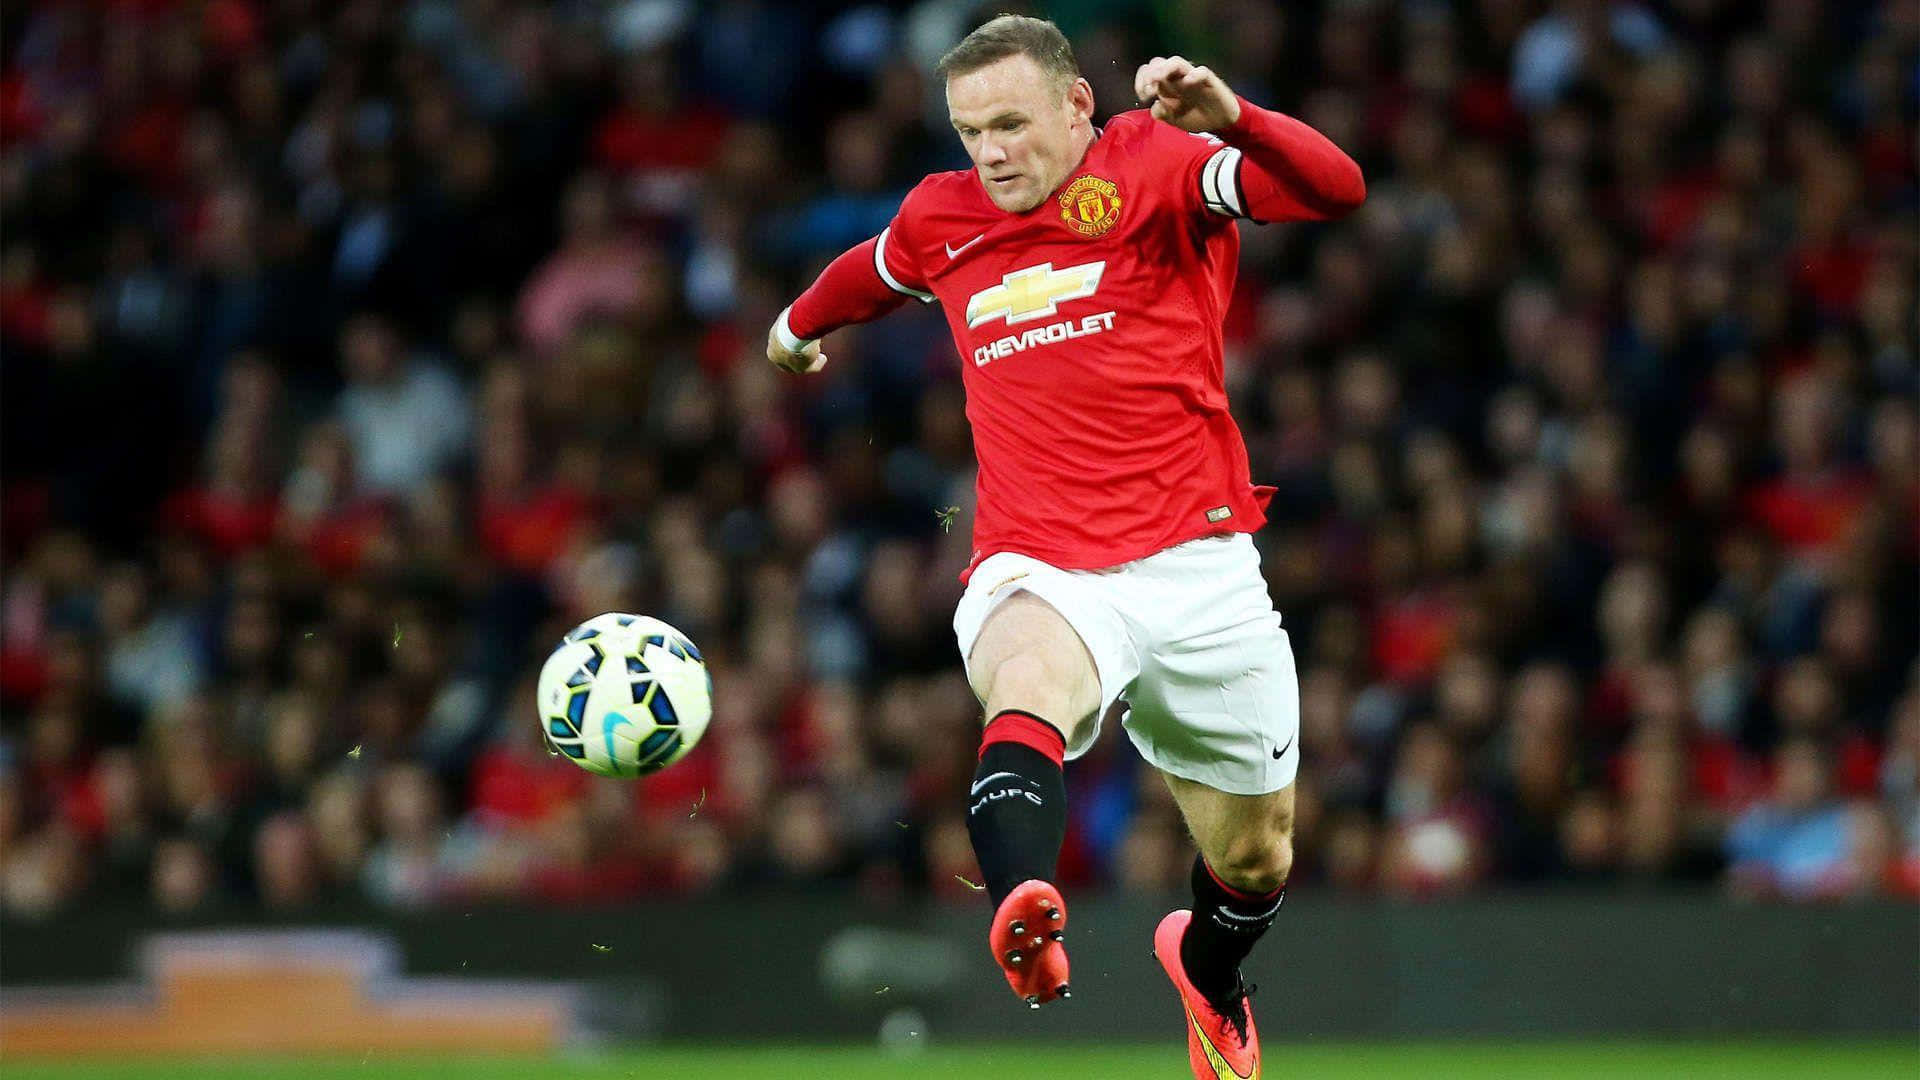 Manchester United legend, Wayne Rooney